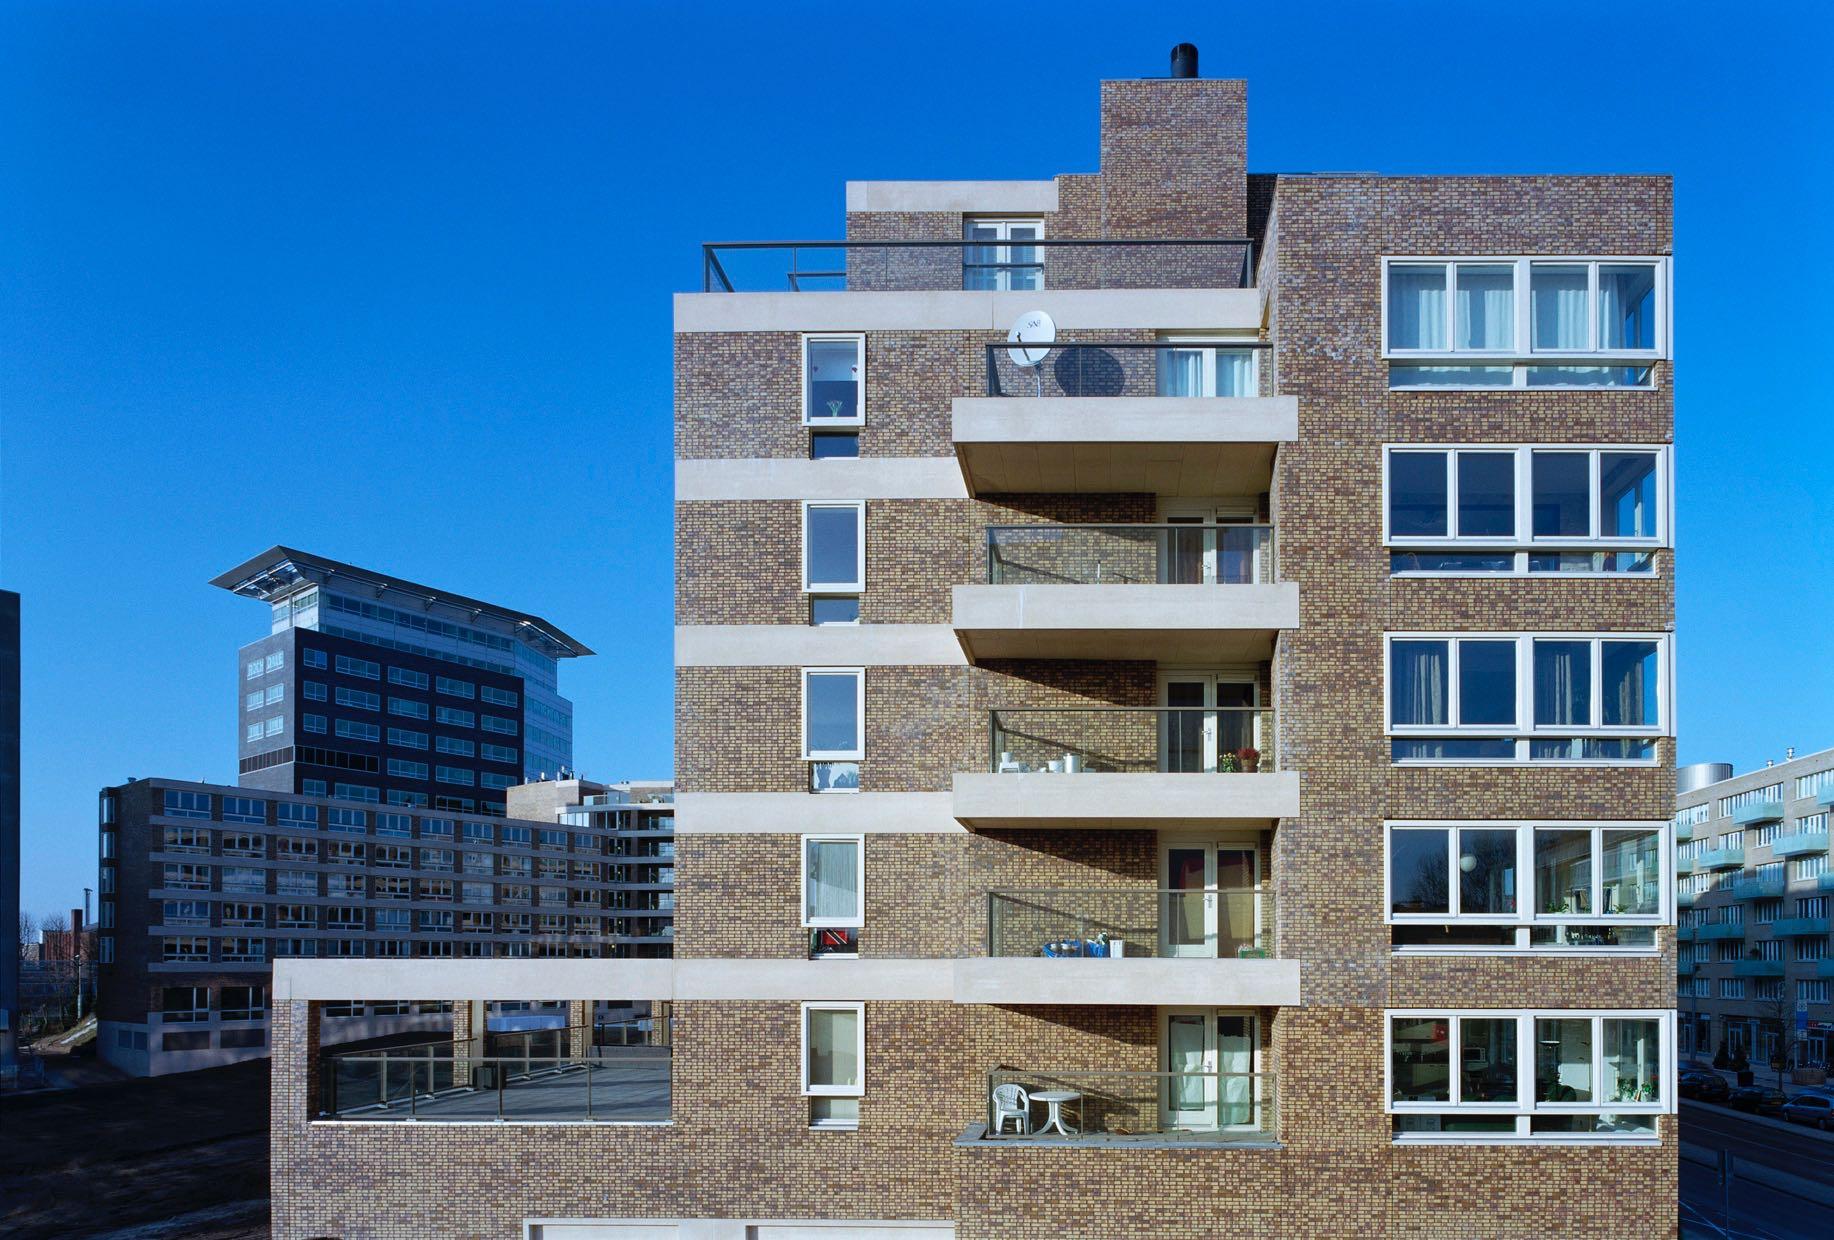 Appartementen Bos en Lommer, Amsterdam -Geurst & Schulze Architecten 2a